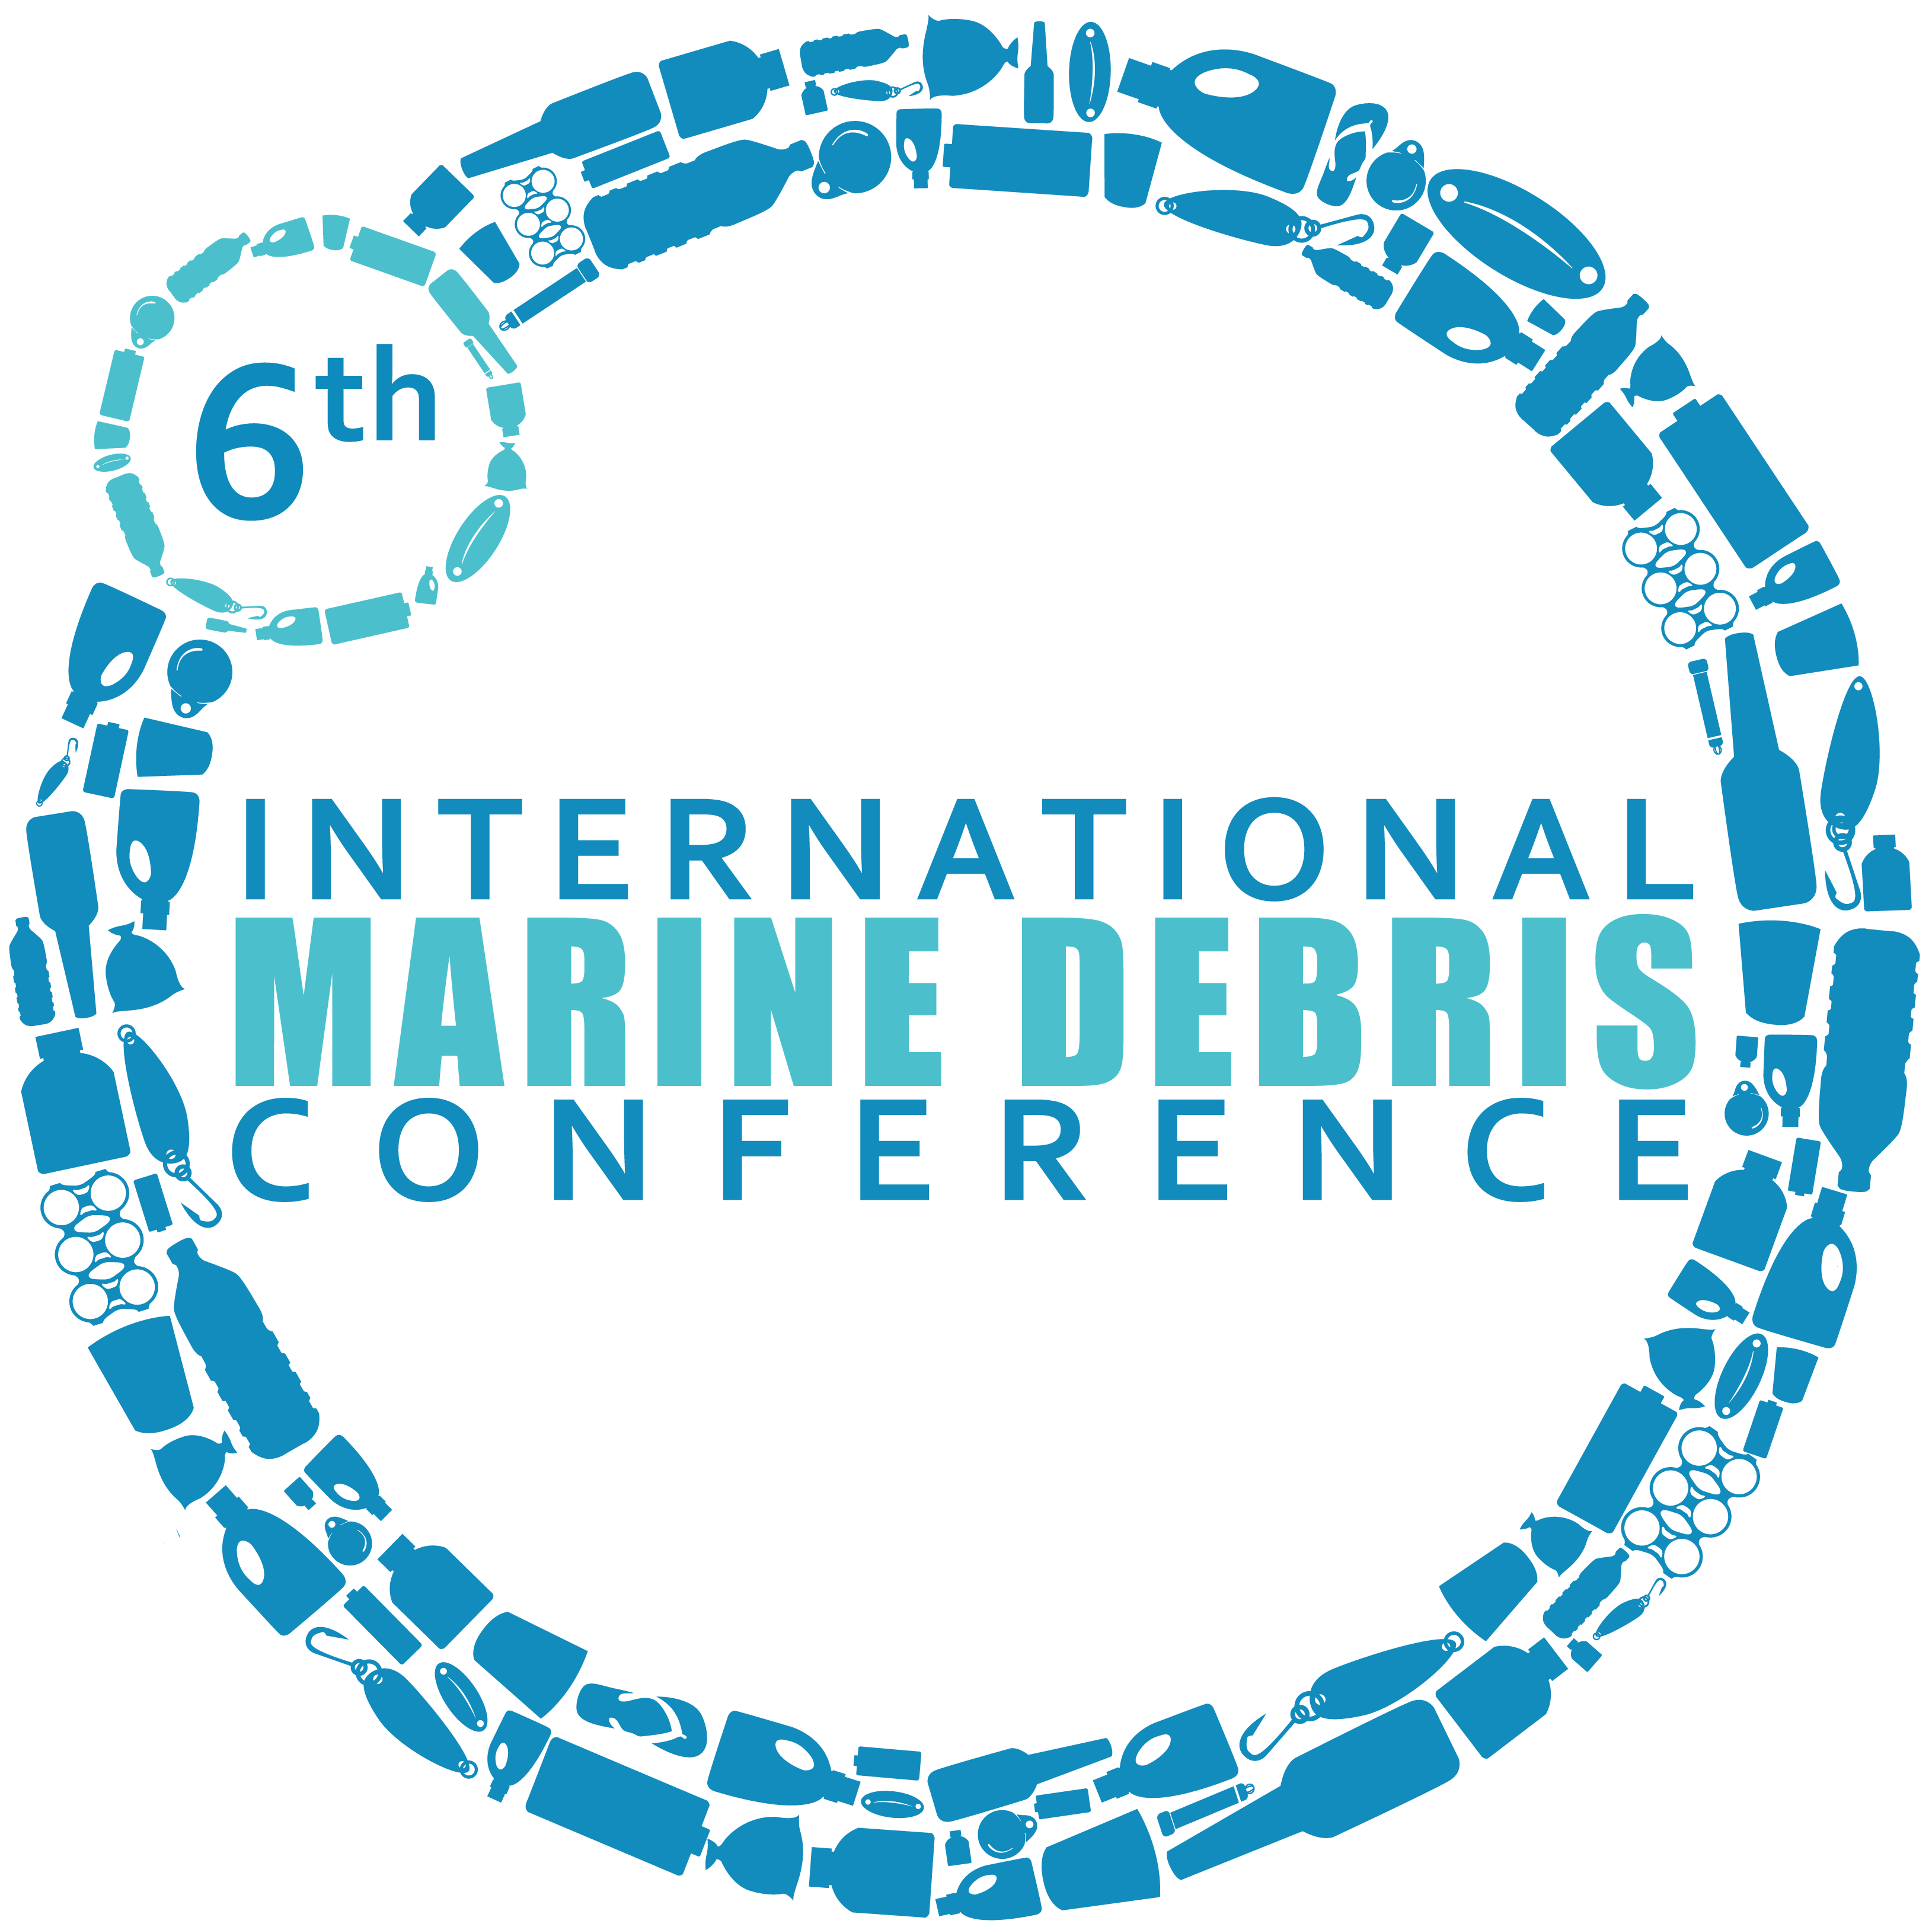 Sixth International Marine Debris Conference